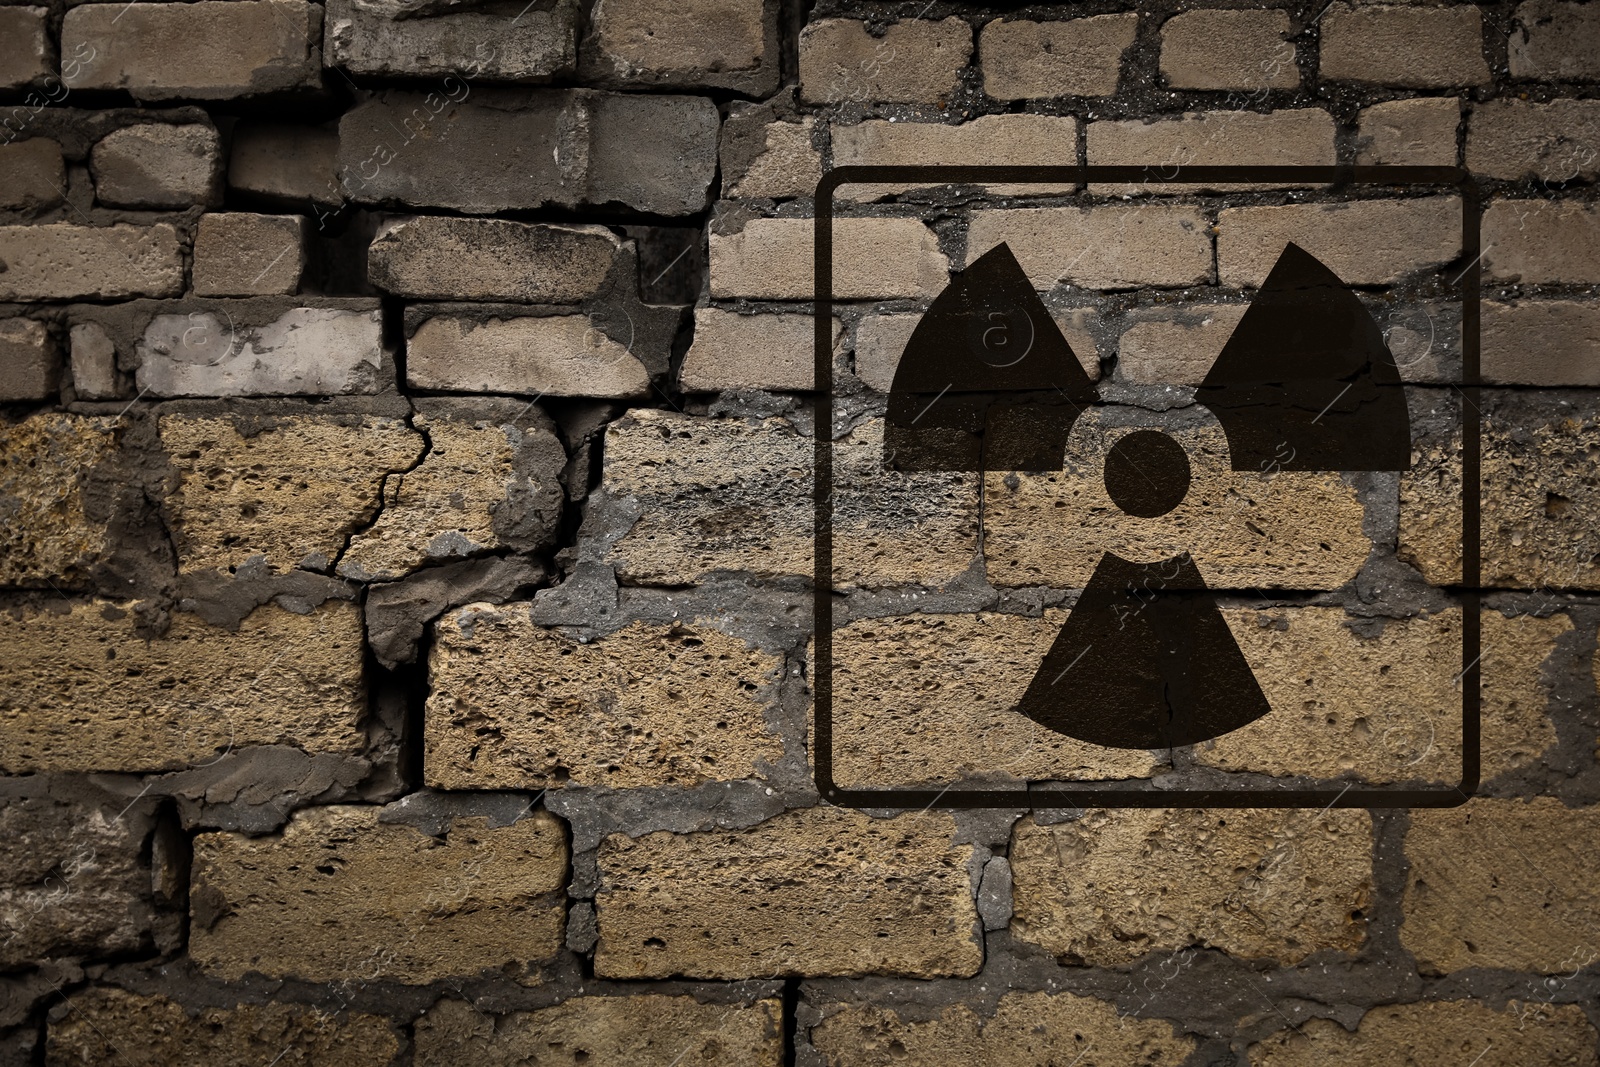 Image of Radioactive sign on old brick wall. Hazard symbol